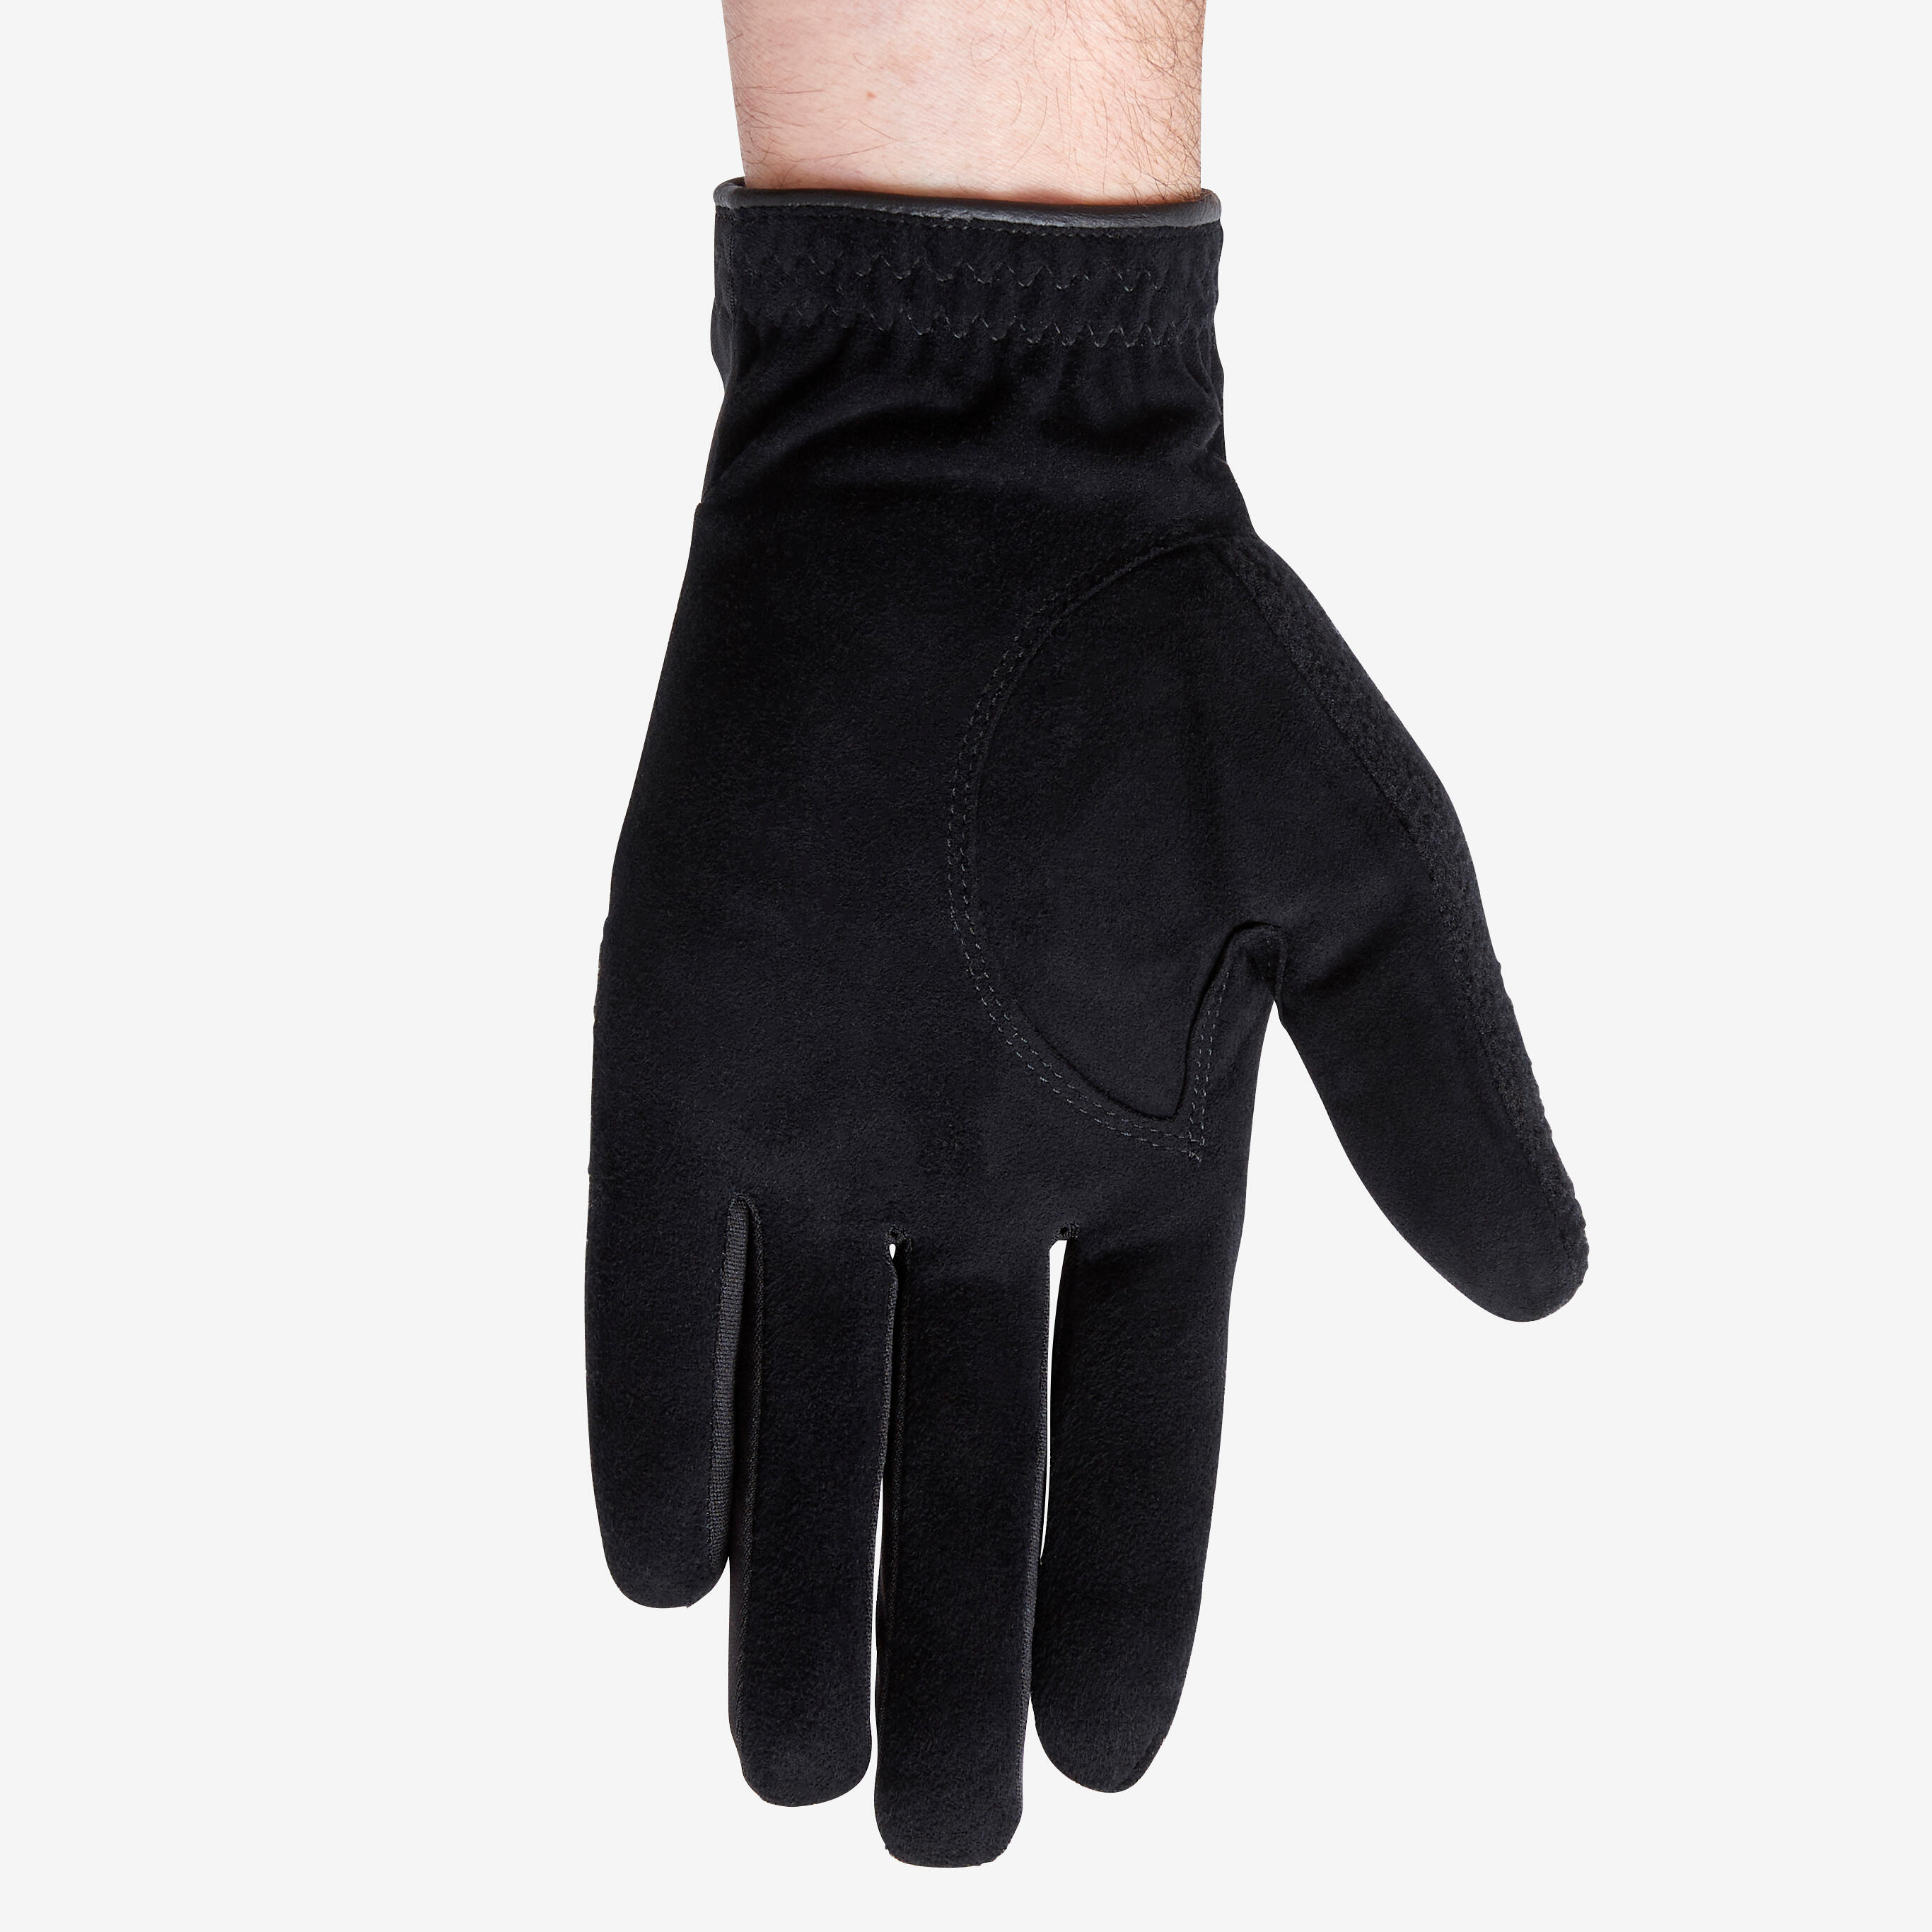 Men's winter golf gloves pair - CW black 3/5